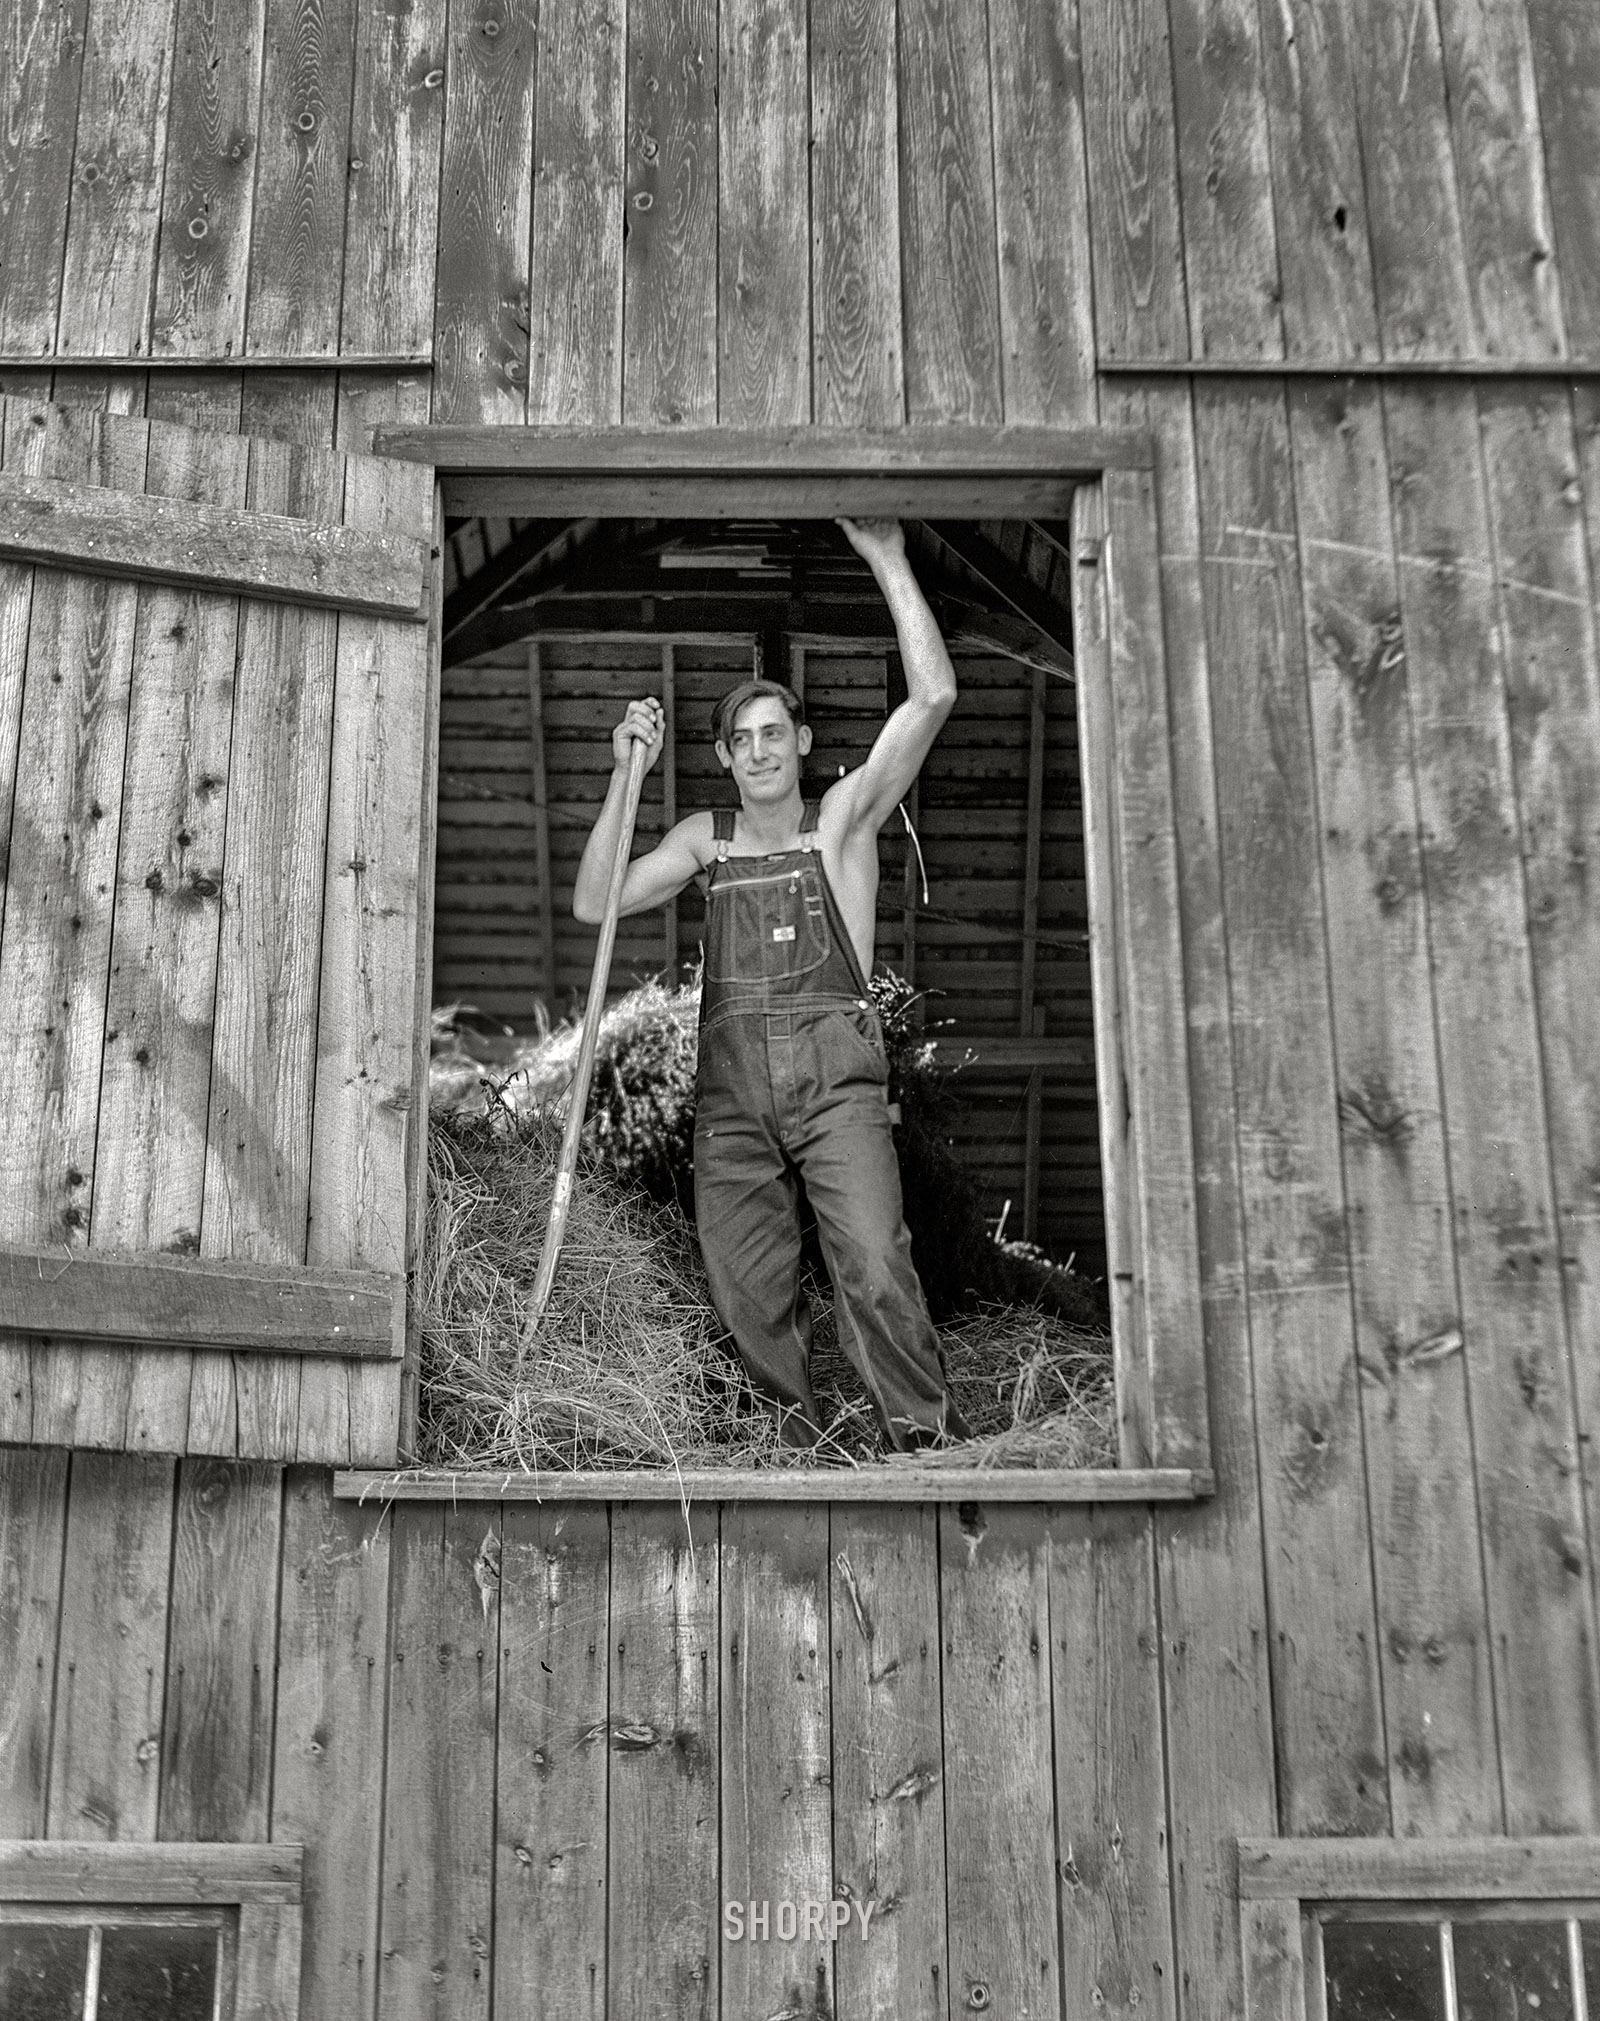 July 1941. "Loading hay into barn. Son of FSA borrower who moved from Nebraska drought area three years ago to Douglas County, Wisconsin." Photo by John Vachon. View full size.